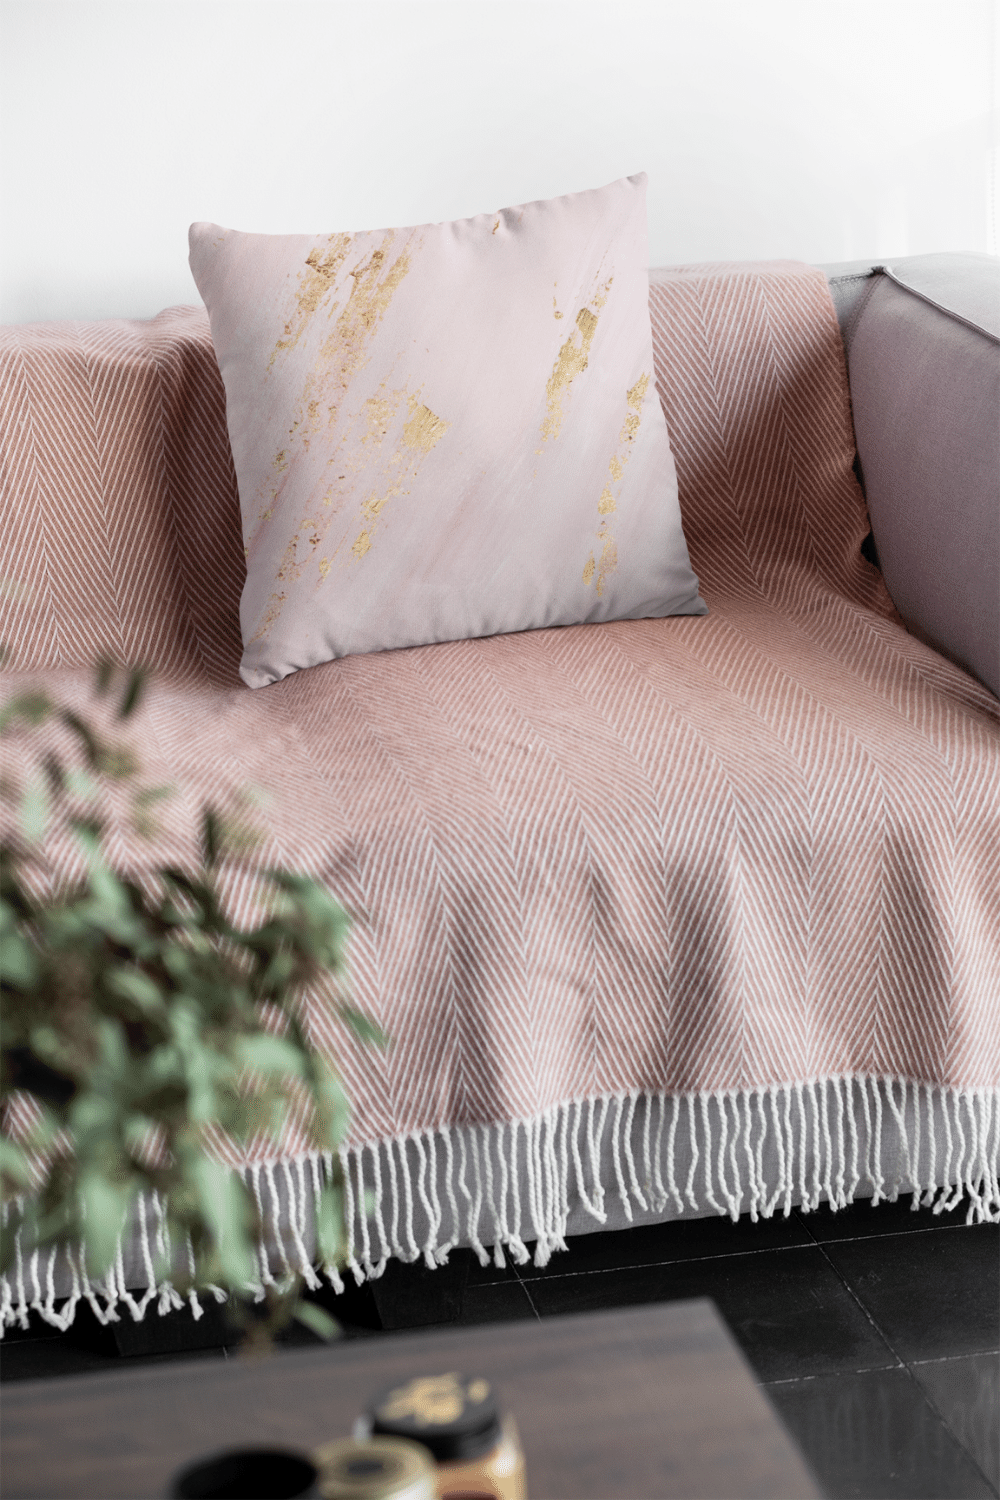 Pillows - Dorm Room Pillow - Pink & Gold Abstract